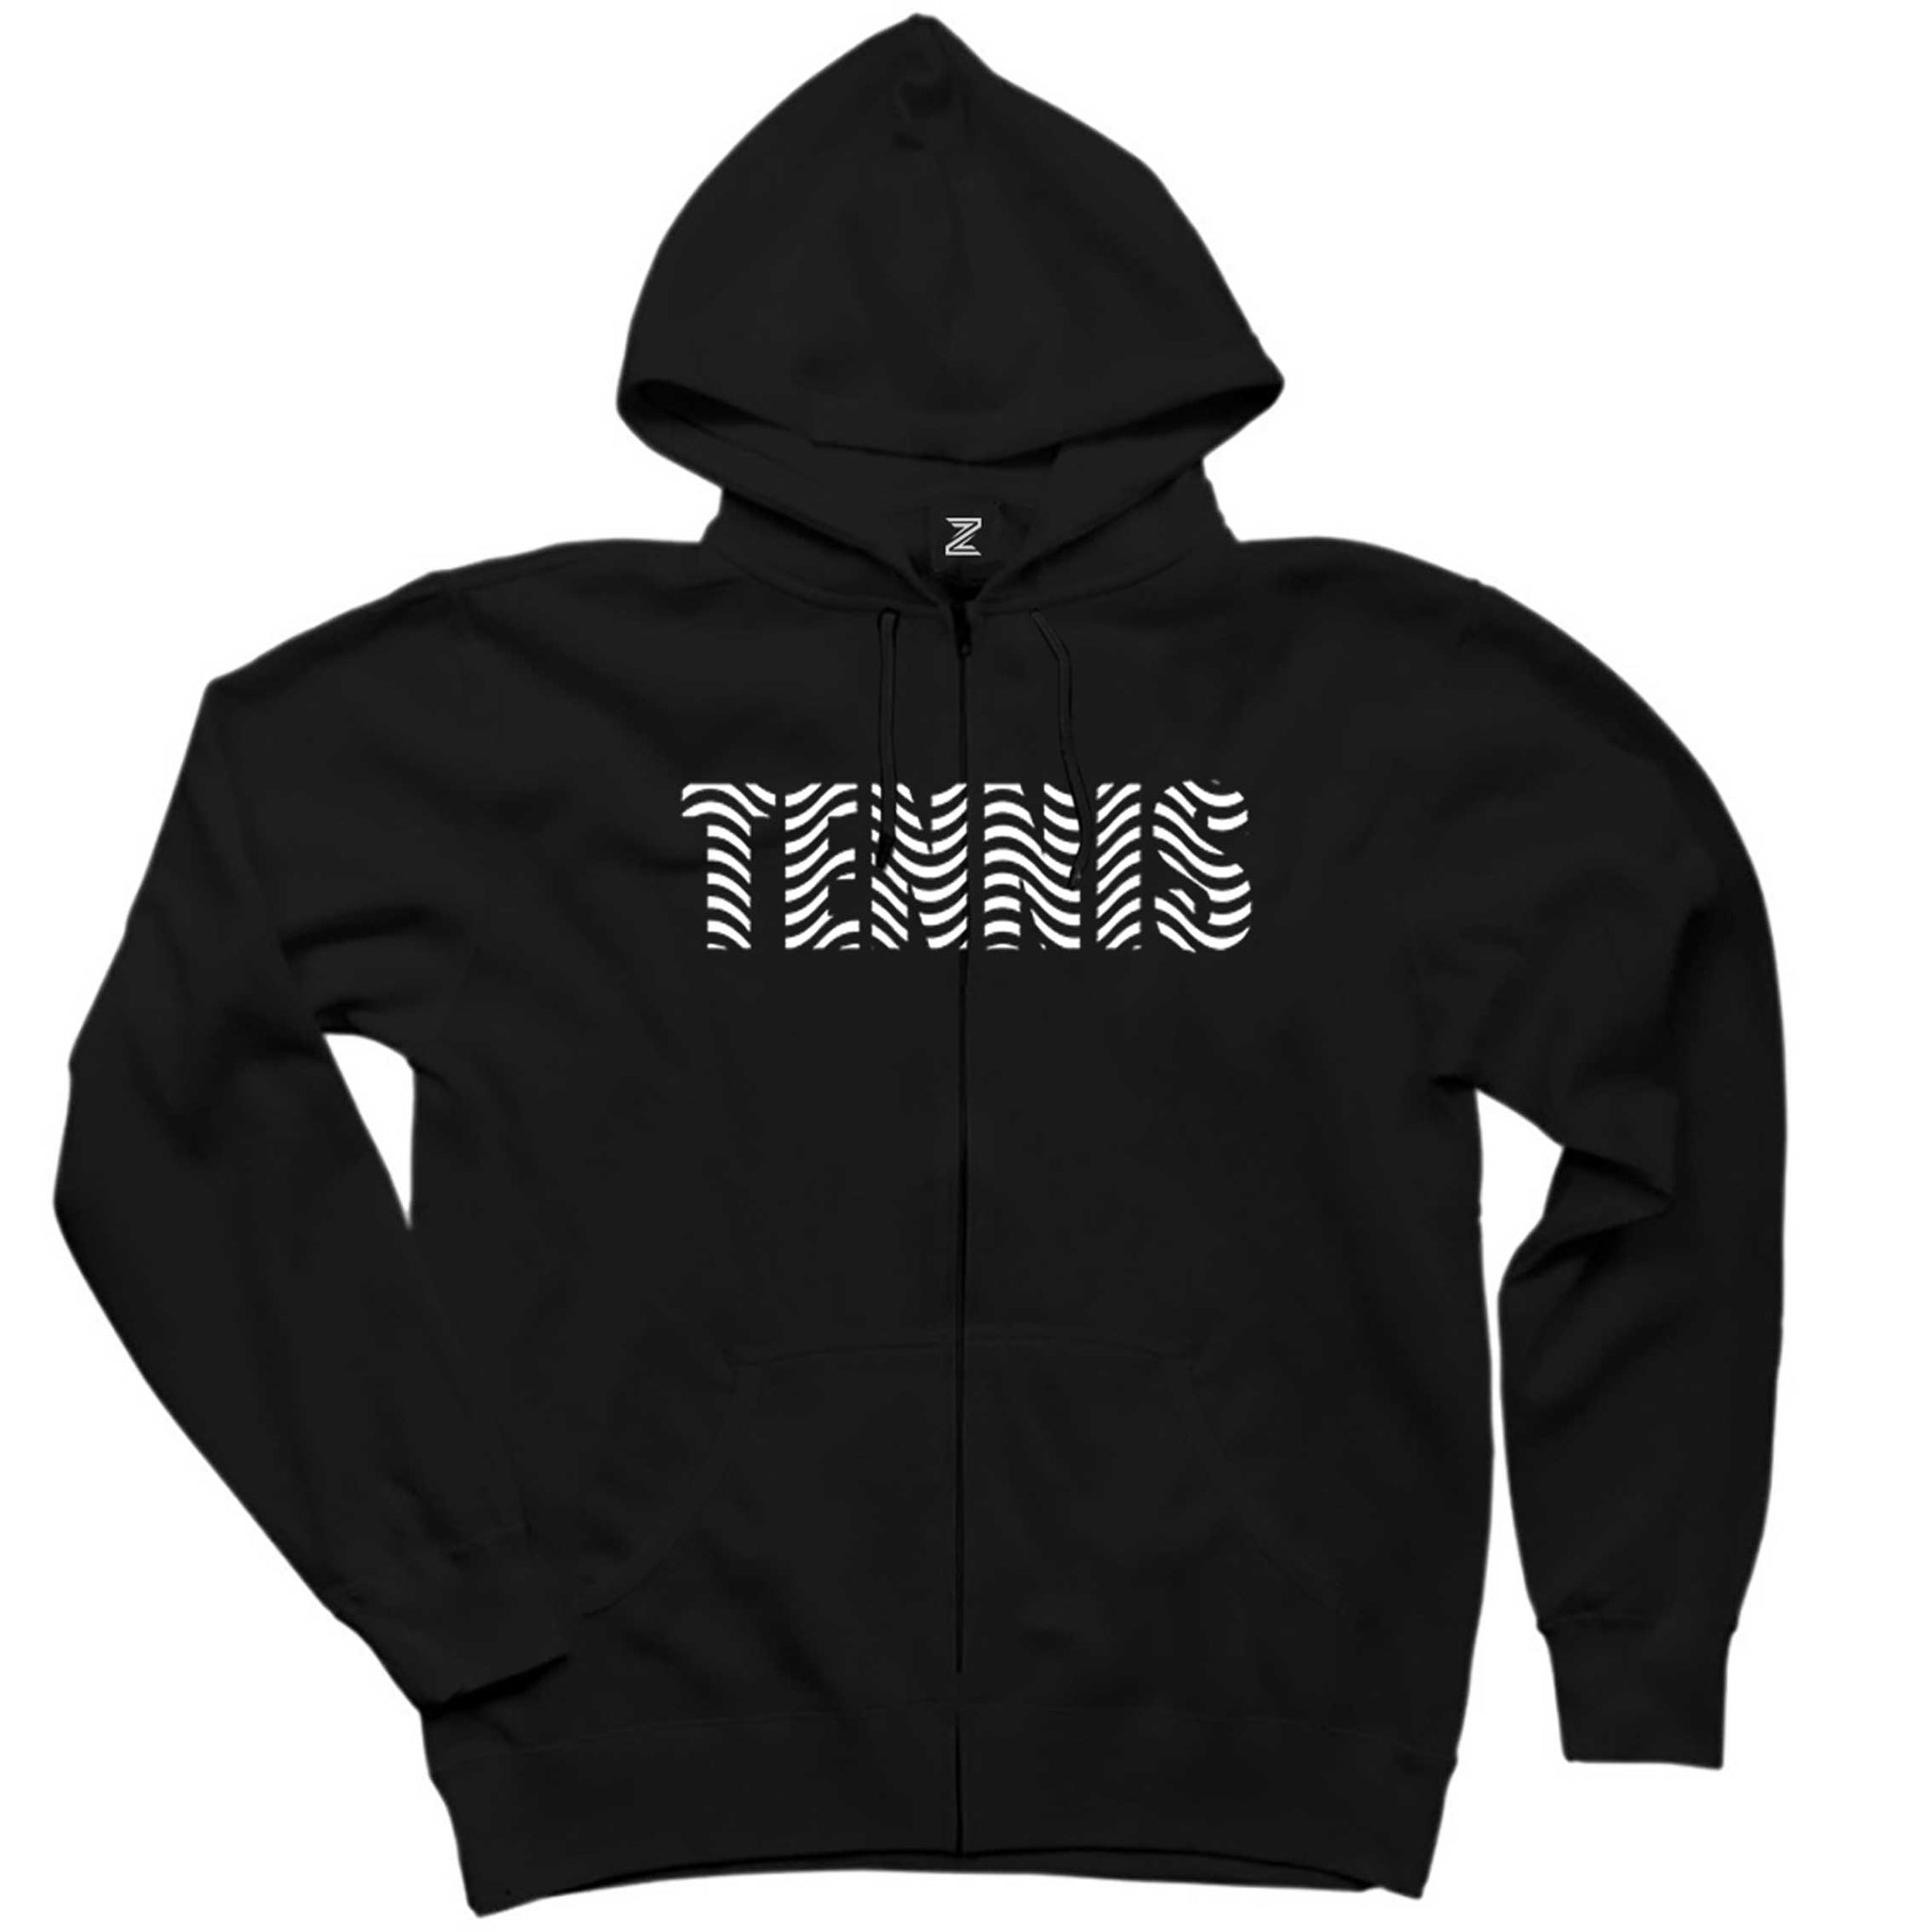 Tennis Text Siyah Fermuarlı Kapşonlu Sweatshirt